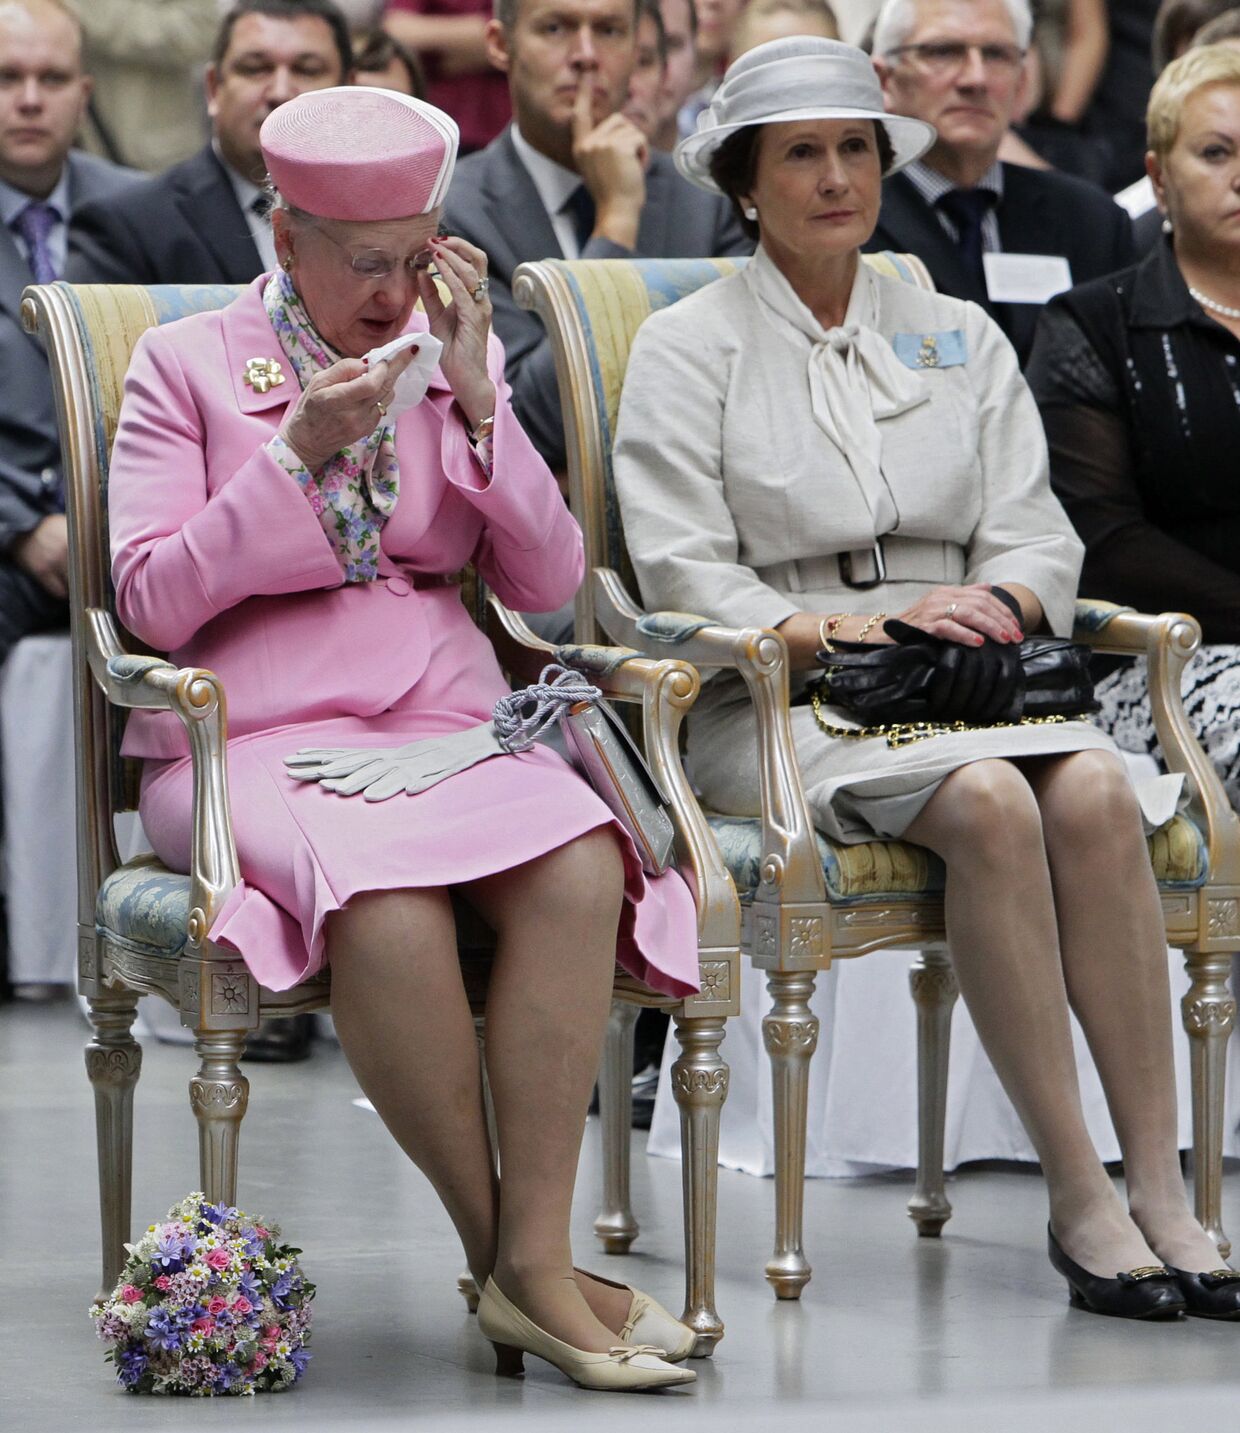 Королева Дании Маргрете II посетила завод Грундфос Истра 7 сентября 2011 года